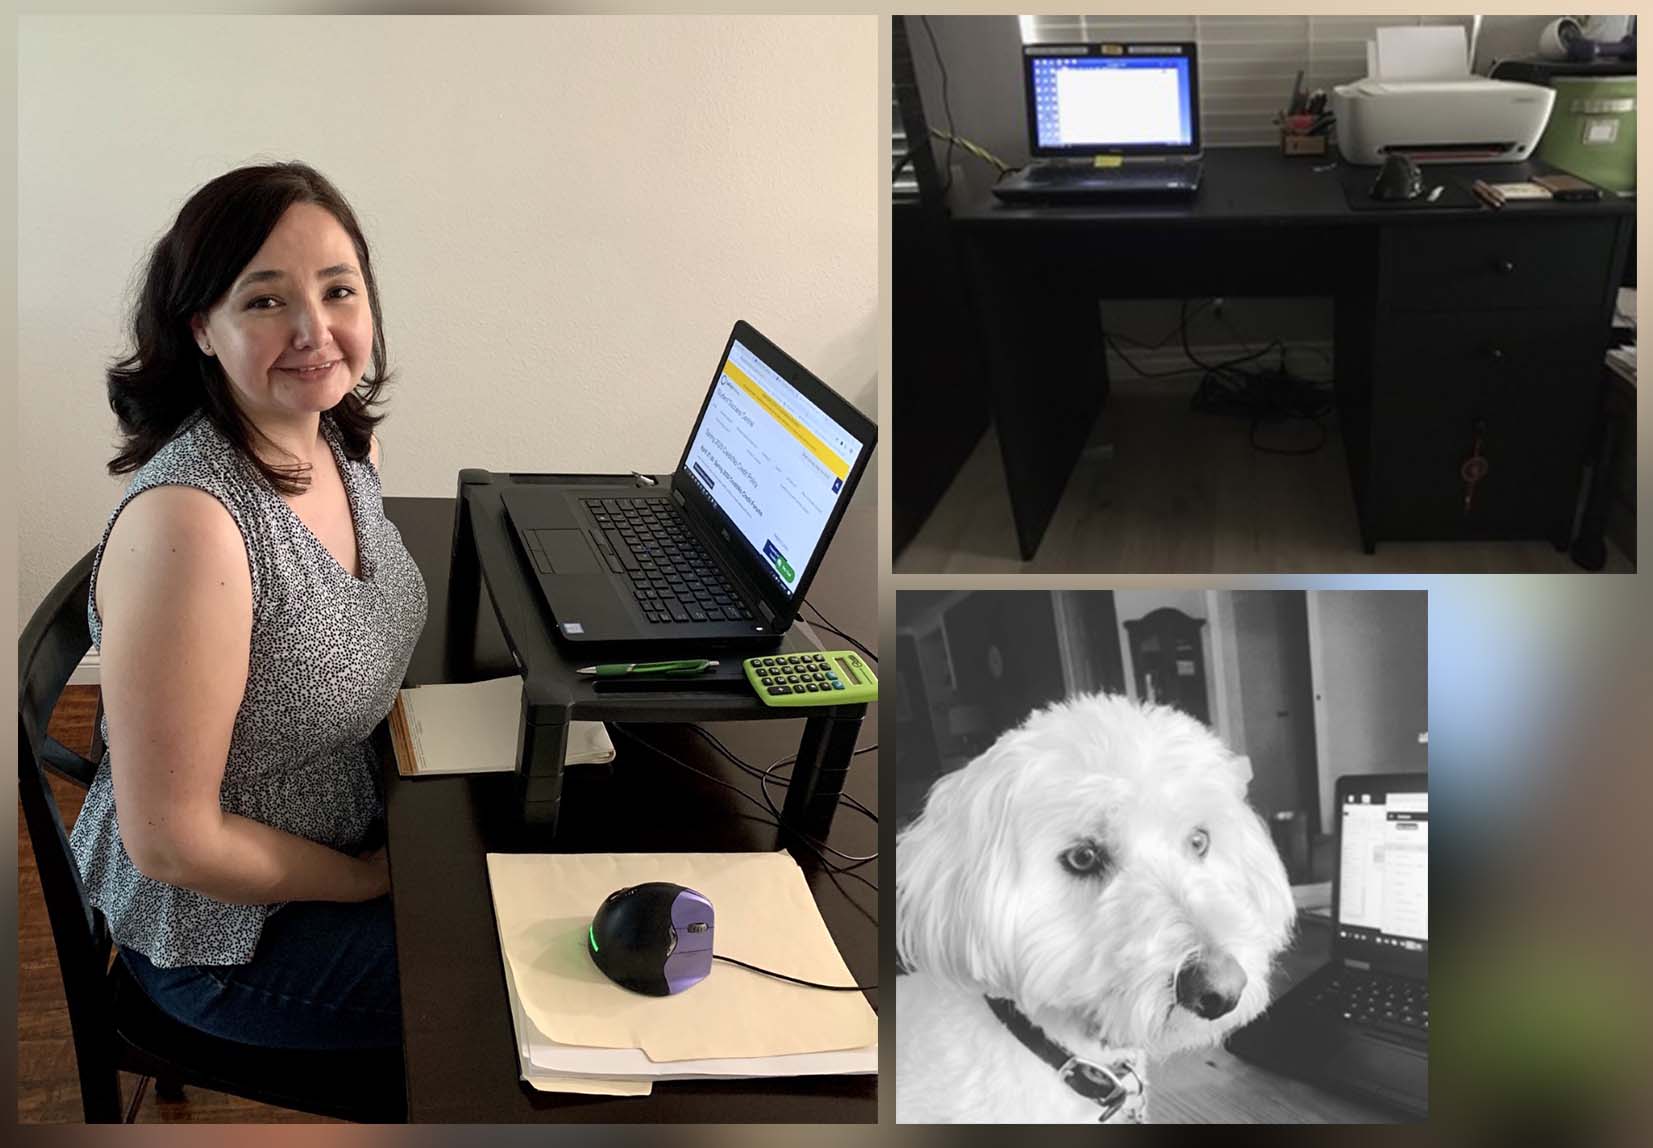 Left to right, clockwise: Laura Facio, engineering advisor; Lita Patel's setup; Monica Kay's dog, Hopps, invading her workspace.